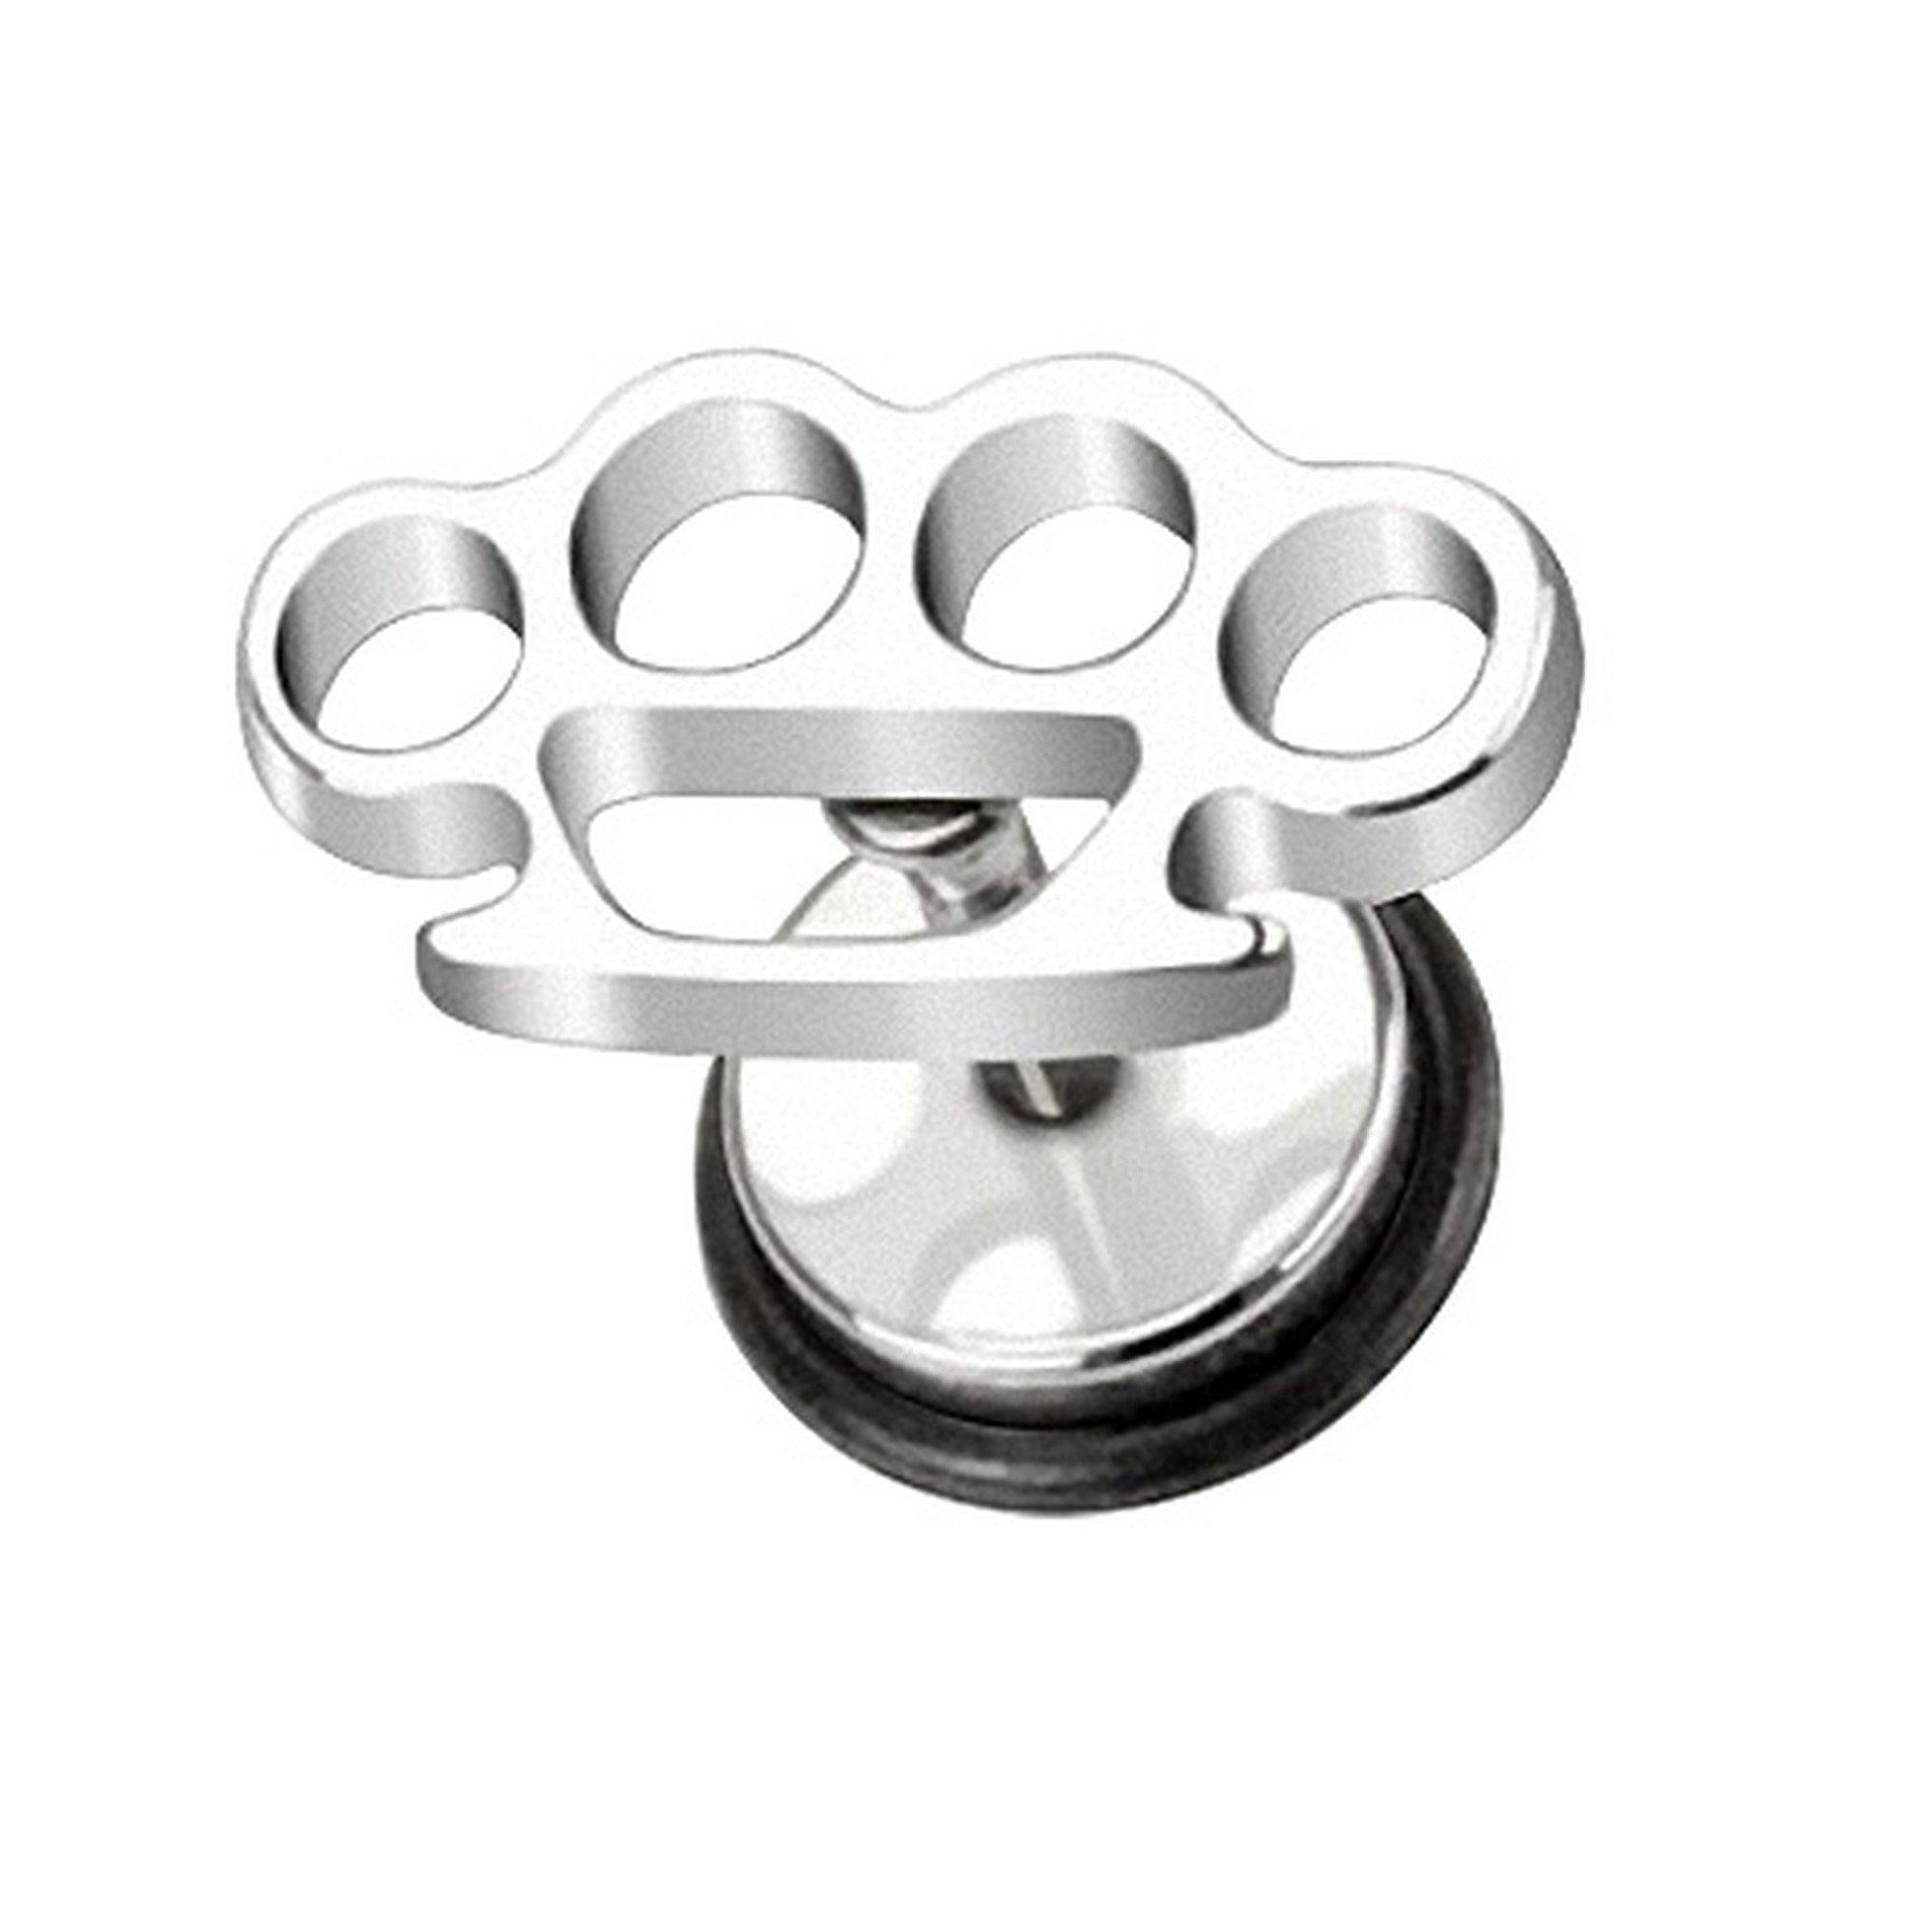 Taffstyle Piercing-Set Piercing Ohr Plug mit Schlagring Style, Piercing Ohrring Ohrstecker Fake Piercing Ohr Plug Schlagring Style Silber